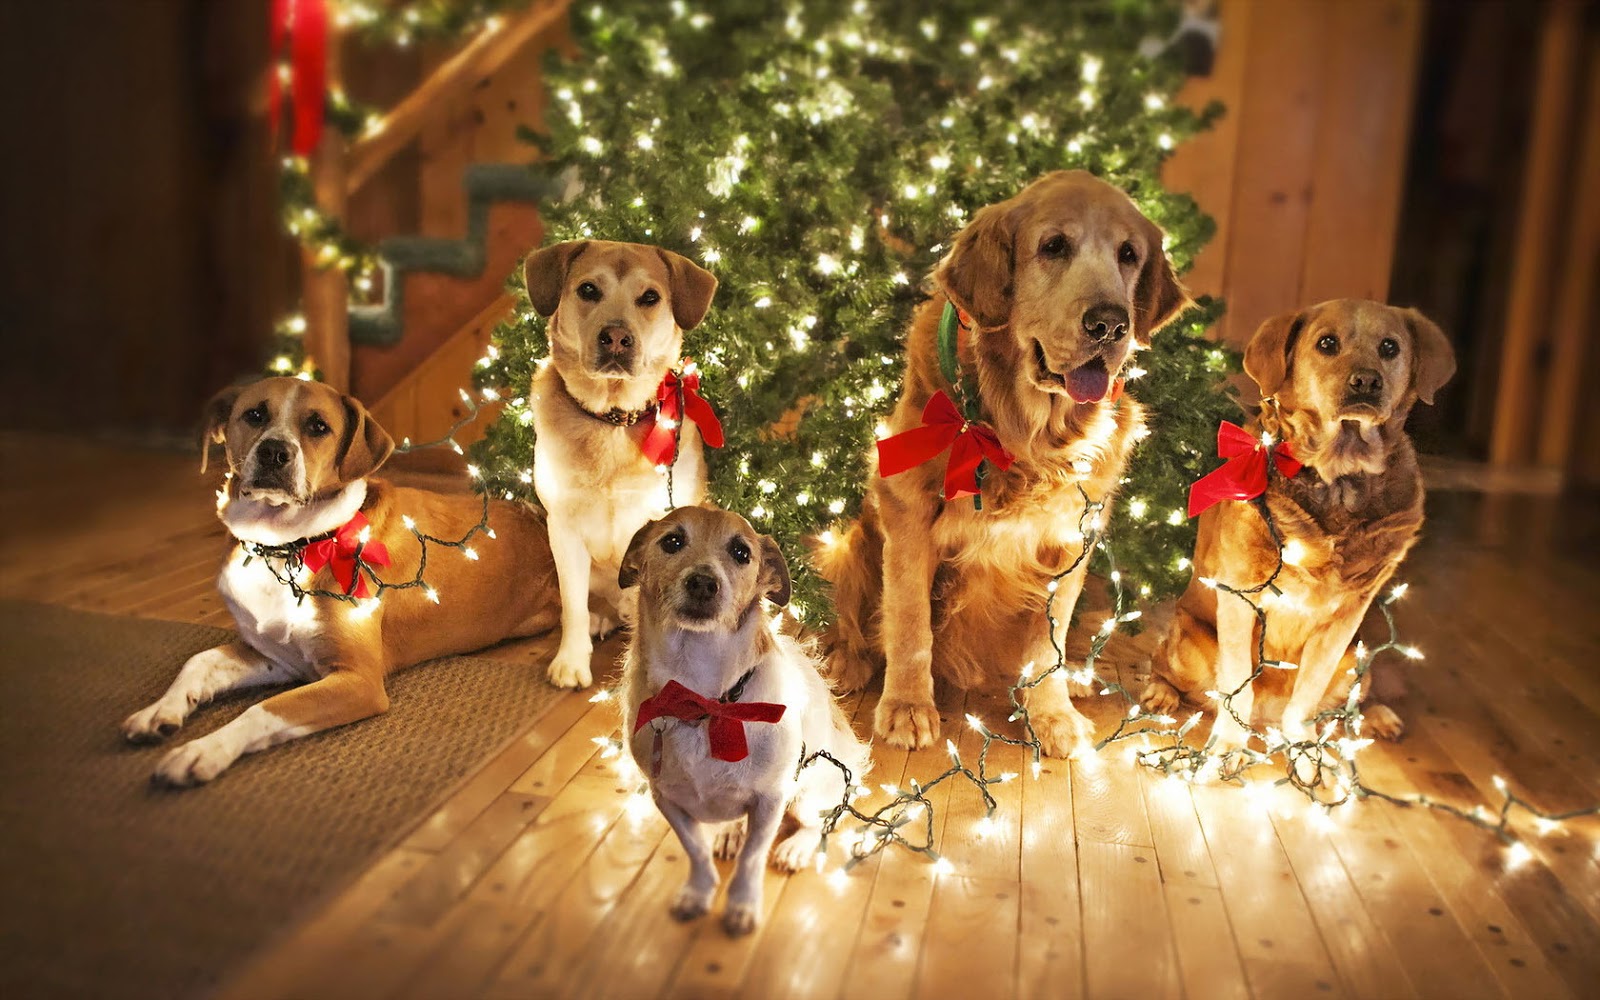 http://4.bp.blogspot.com/-ZjsS-A4Afes/UNDdVCnRRII/AAAAAAAAJAI/SW4DUk89Oyk/s1600/photo-of-dogs-under-the-christmas-tree-hd-christmas-wallpaper-with-dogs.jpg